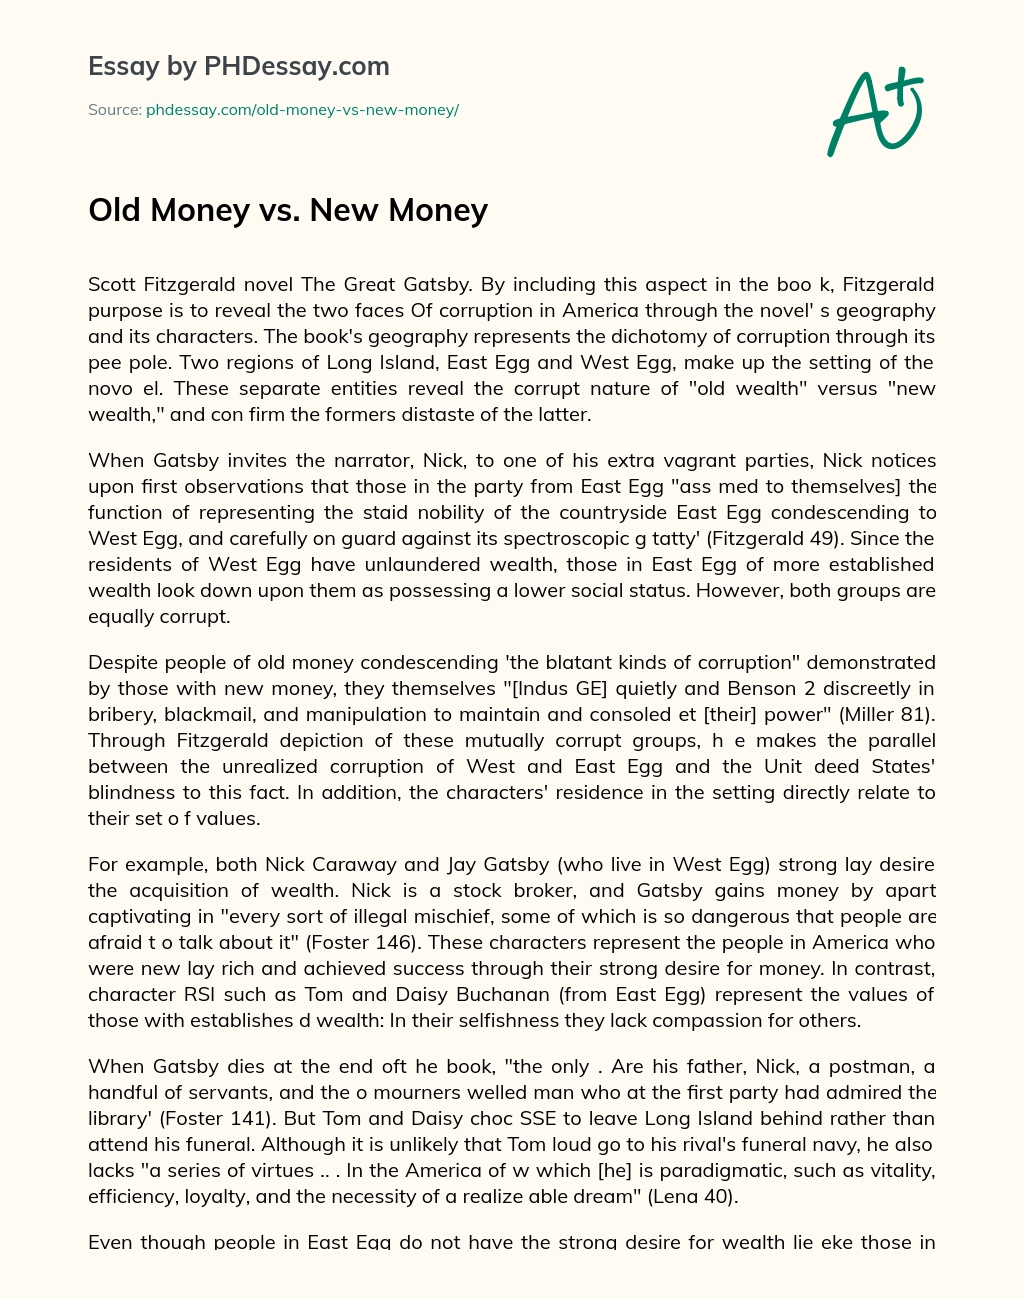 Old Money vs. New Money essay